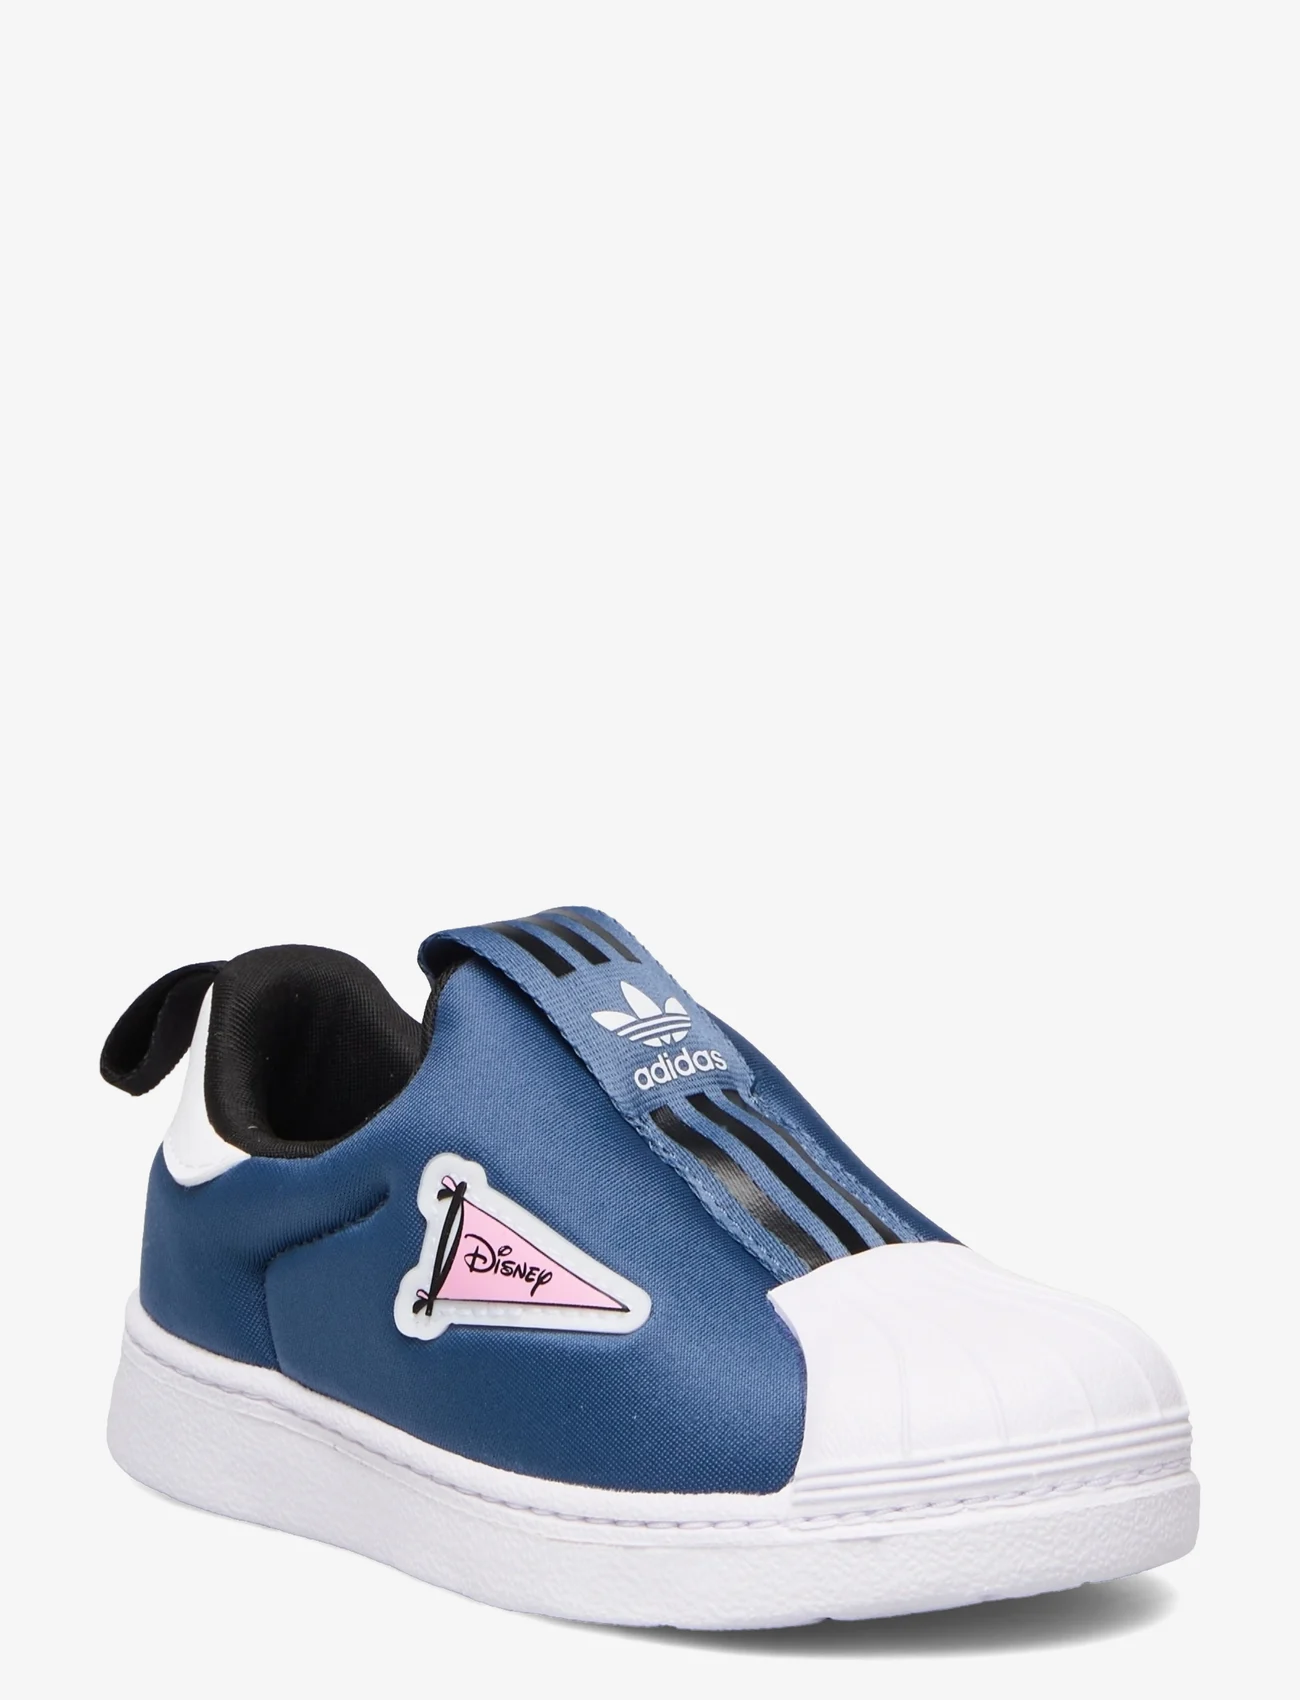 intelligence marking pneumonia adidas Originals Adidas X Disney Superstar 360 X Shoes - Low Tops |  Boozt.com